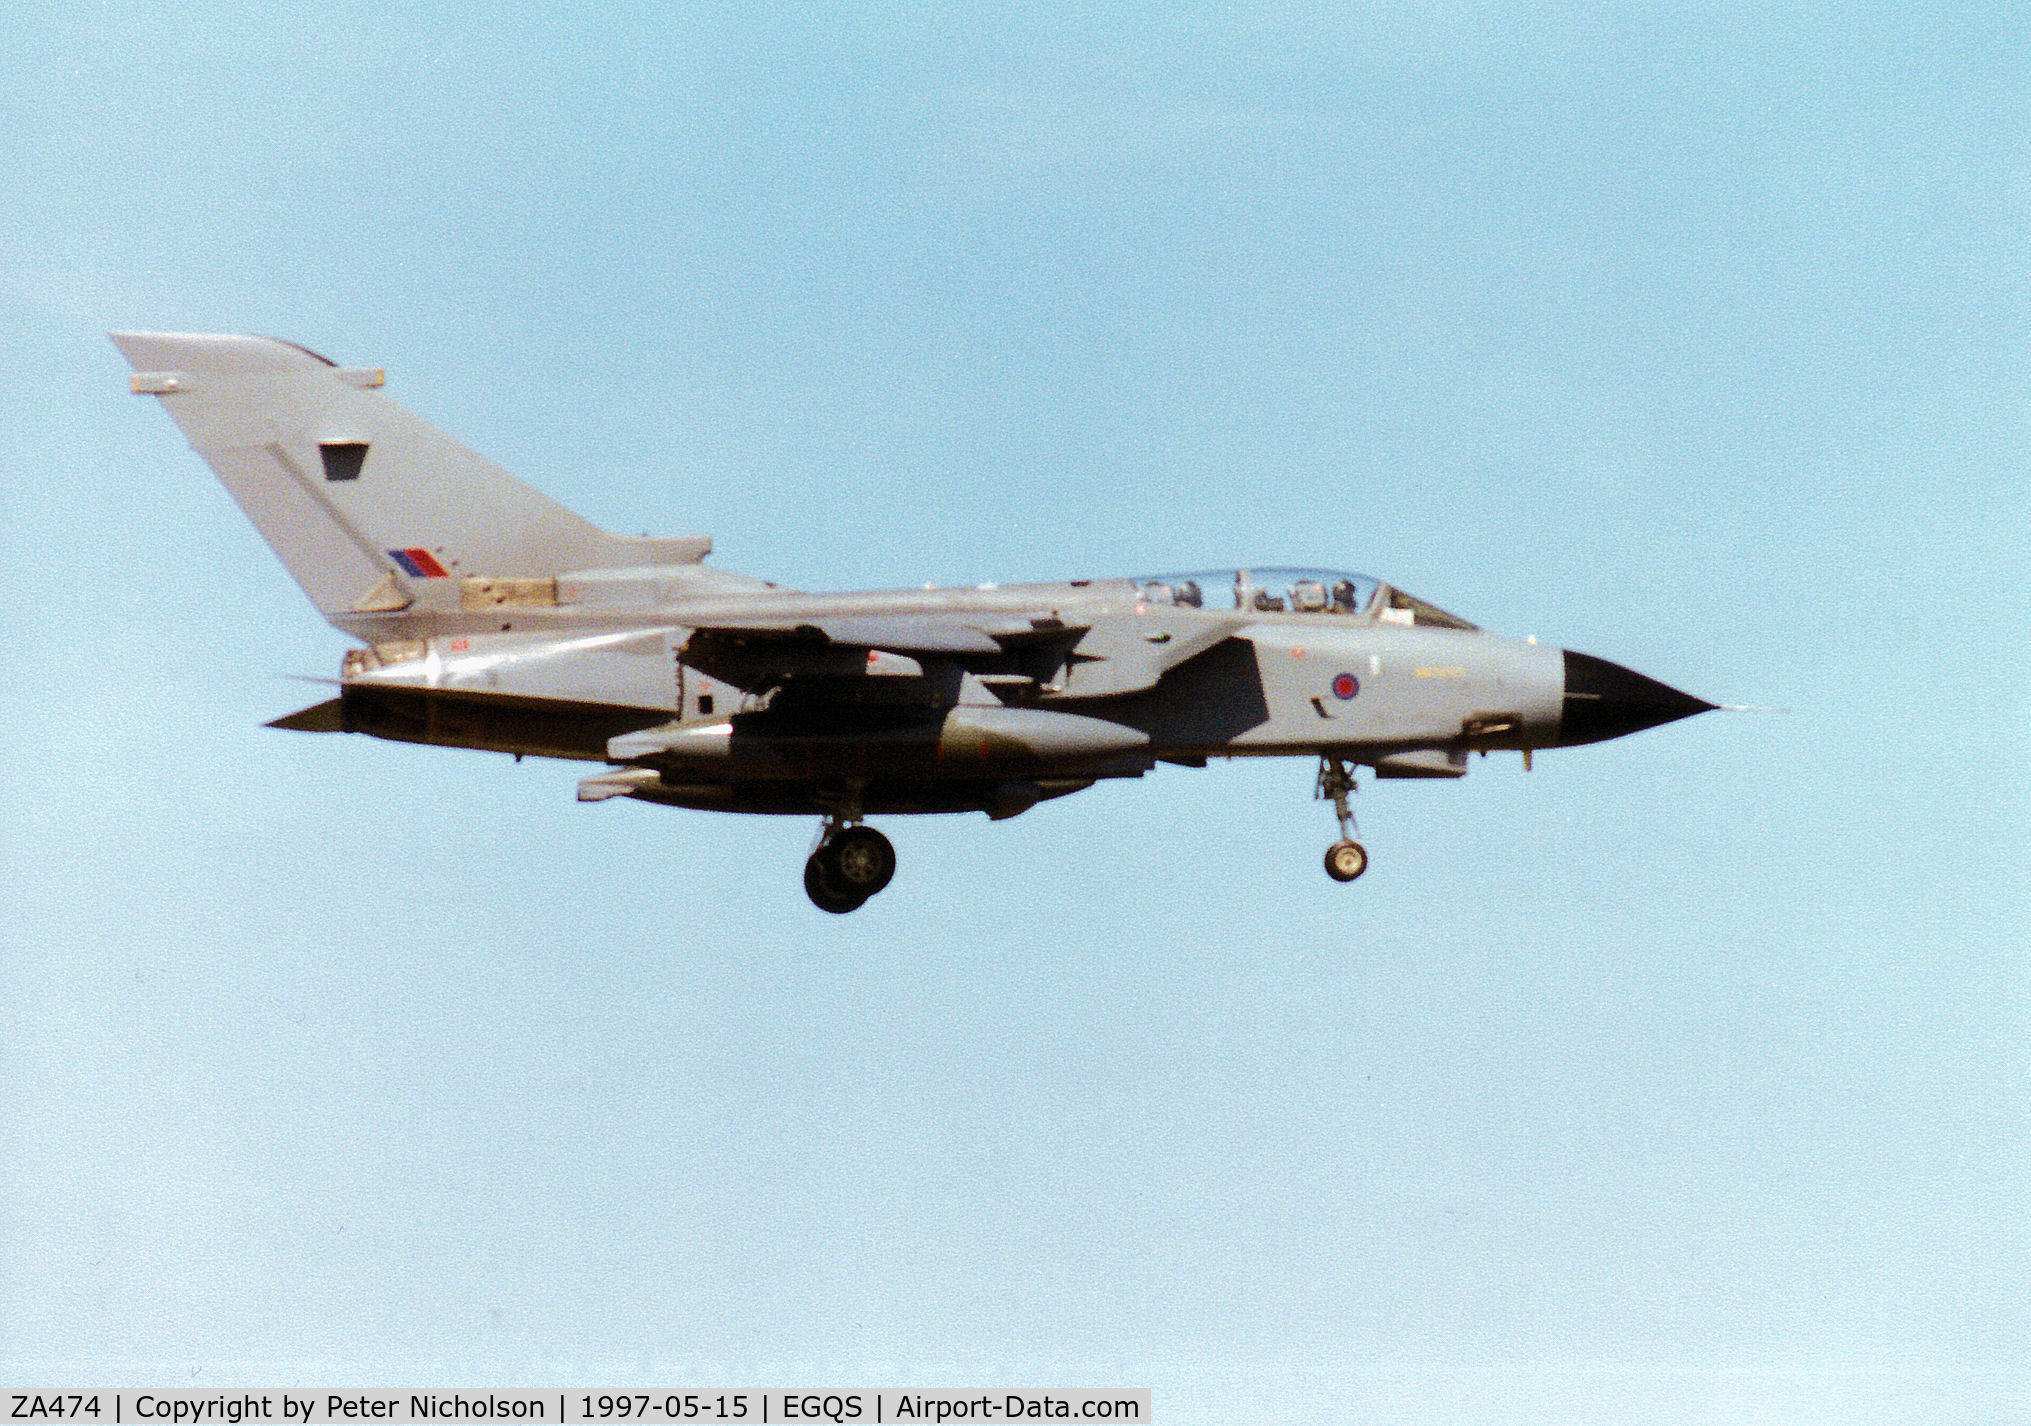 ZA474, 1983 Panavia Tornado GR.1B C/N 300/BS104/3140, Tornado GR.1B, callsign Jackal 1, of 12 Squadron on finals for Runway 05 at RAF Lossiemouth in May 1997.